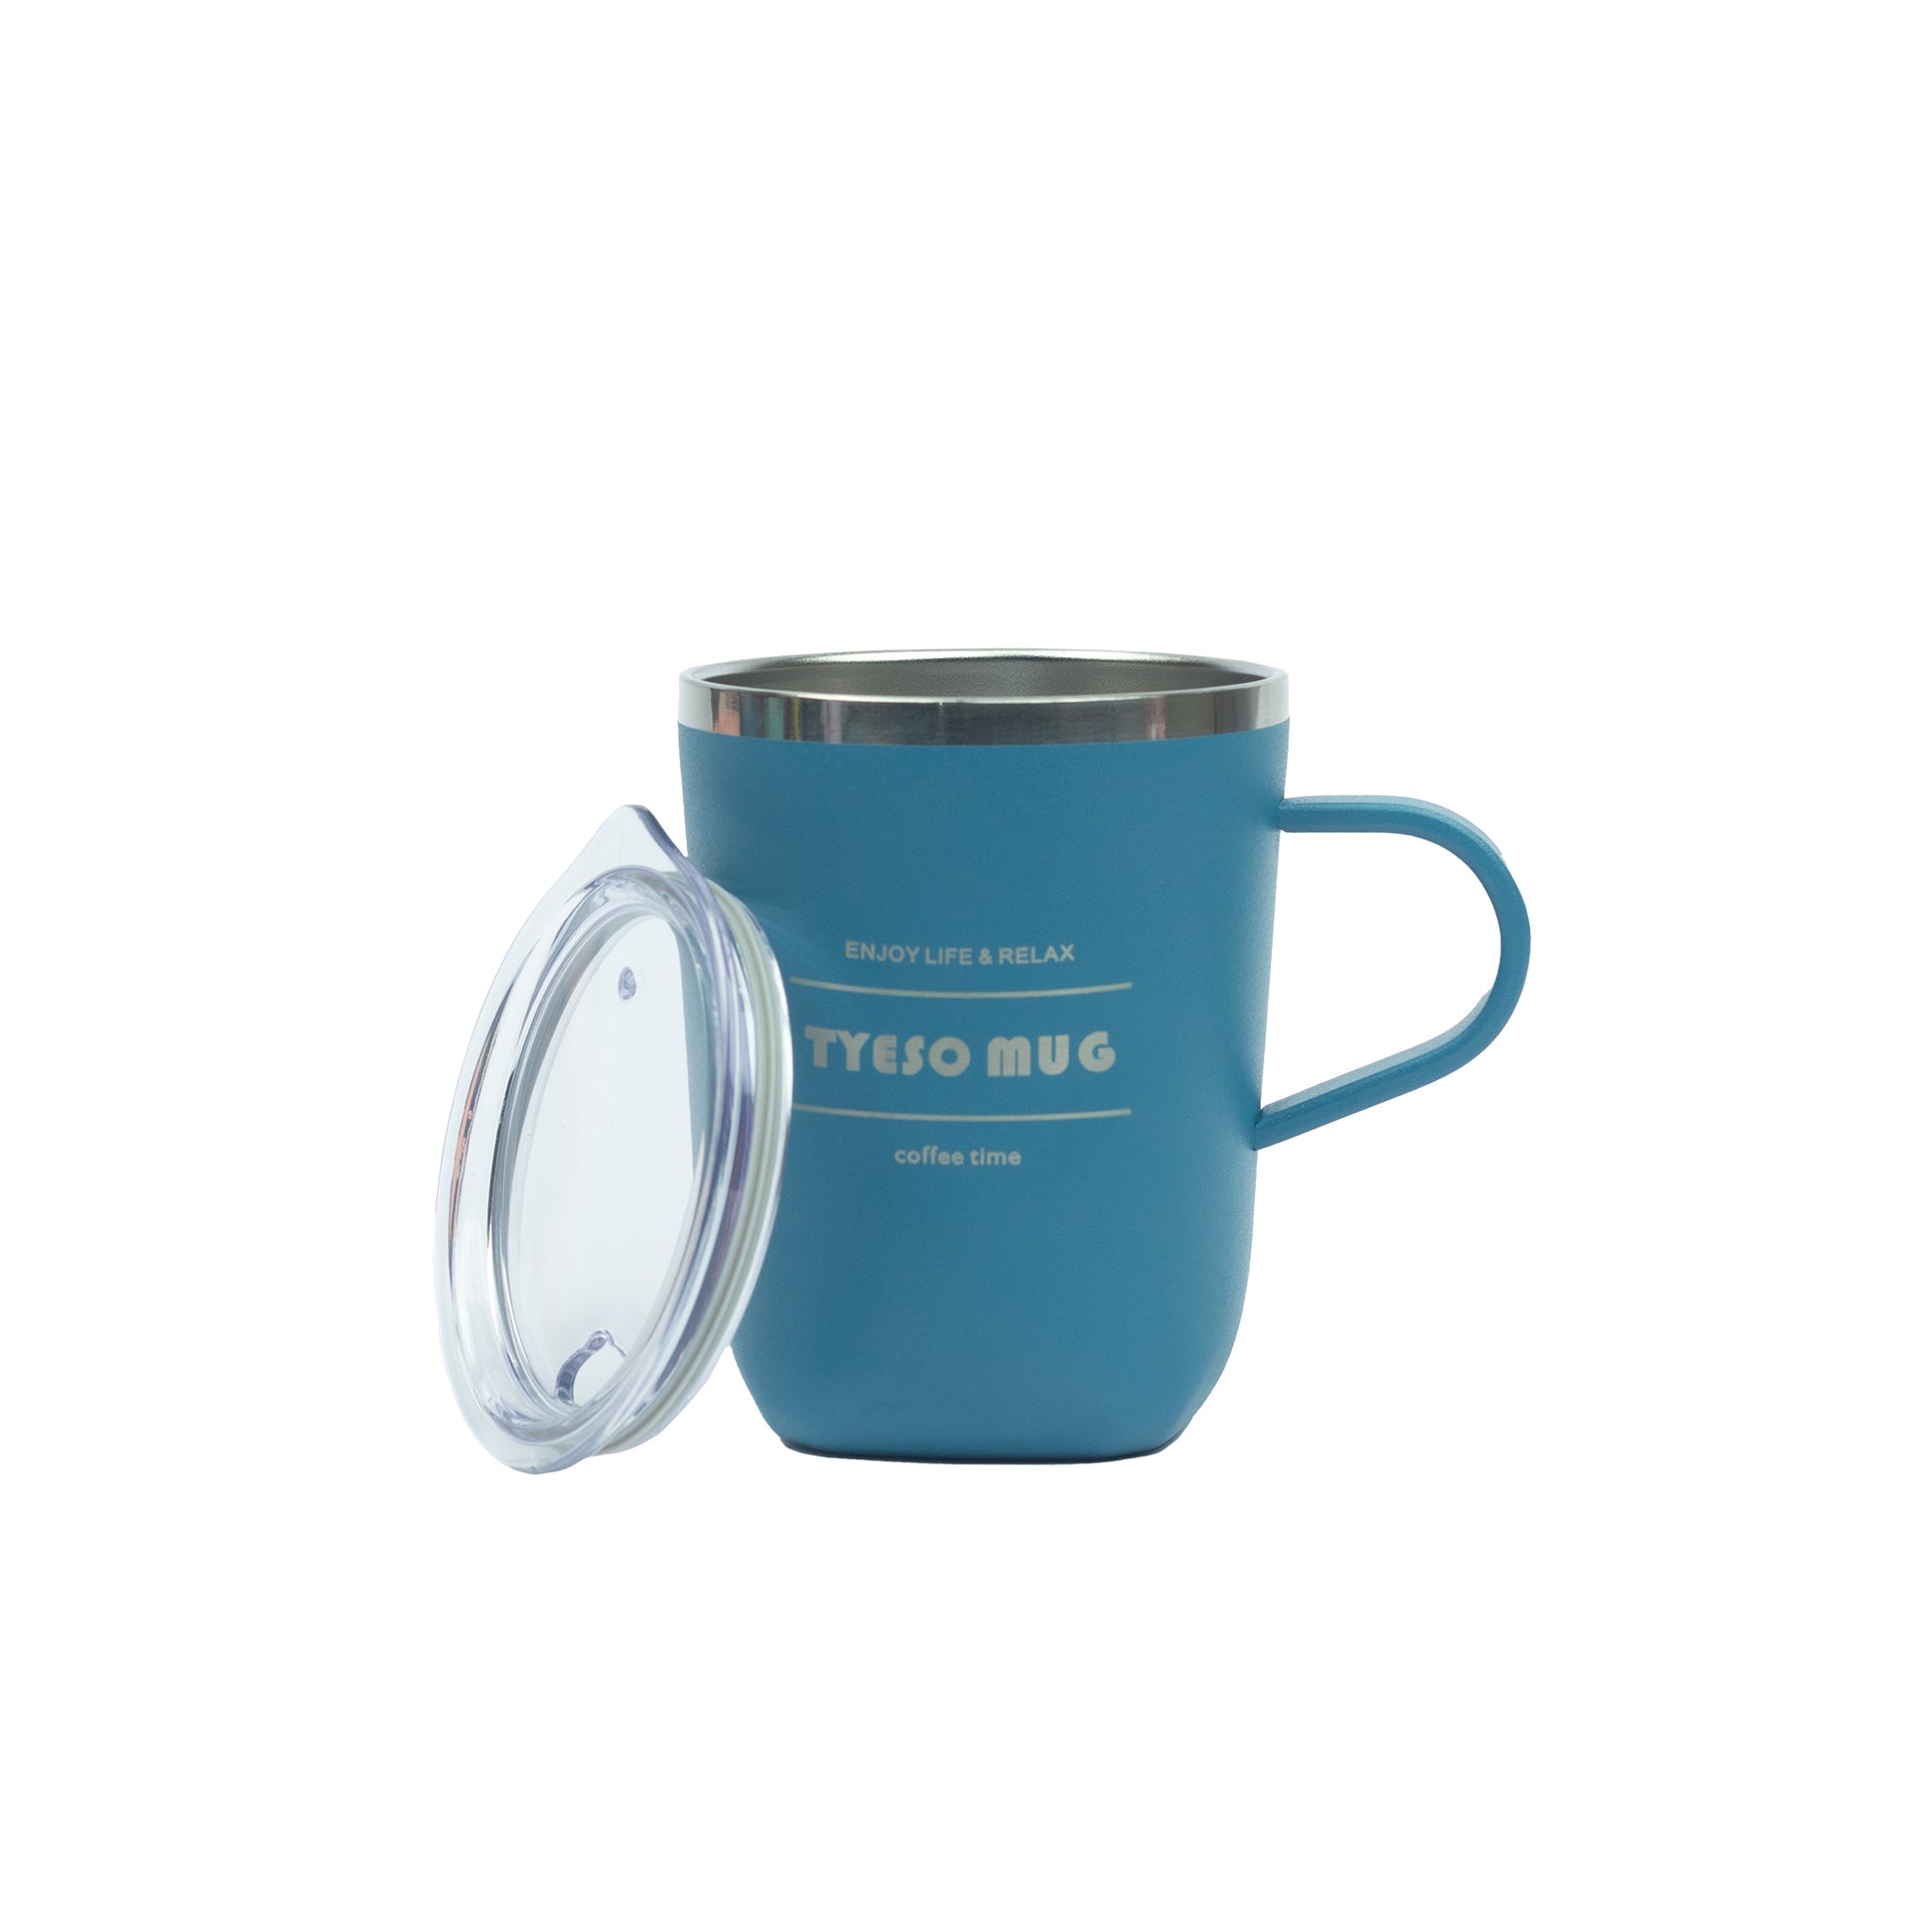 Stainless Steel Coffee/Tea Cup - 300ml tynimo